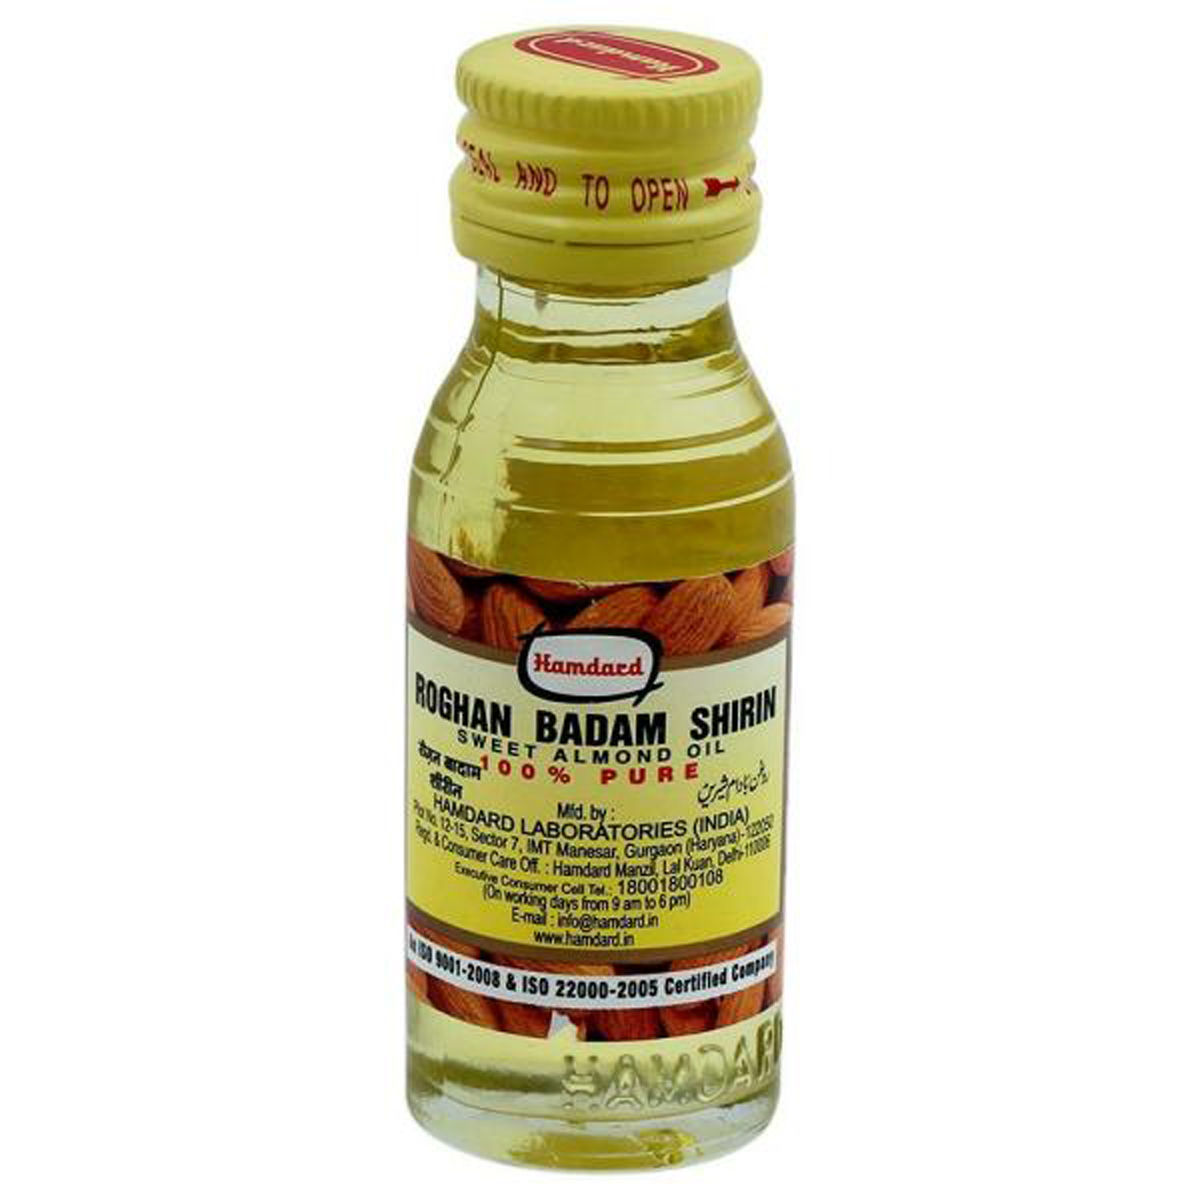 Hamdard Roghan Badam Shirin Almond Oil, 25 ml, Pack of 1 